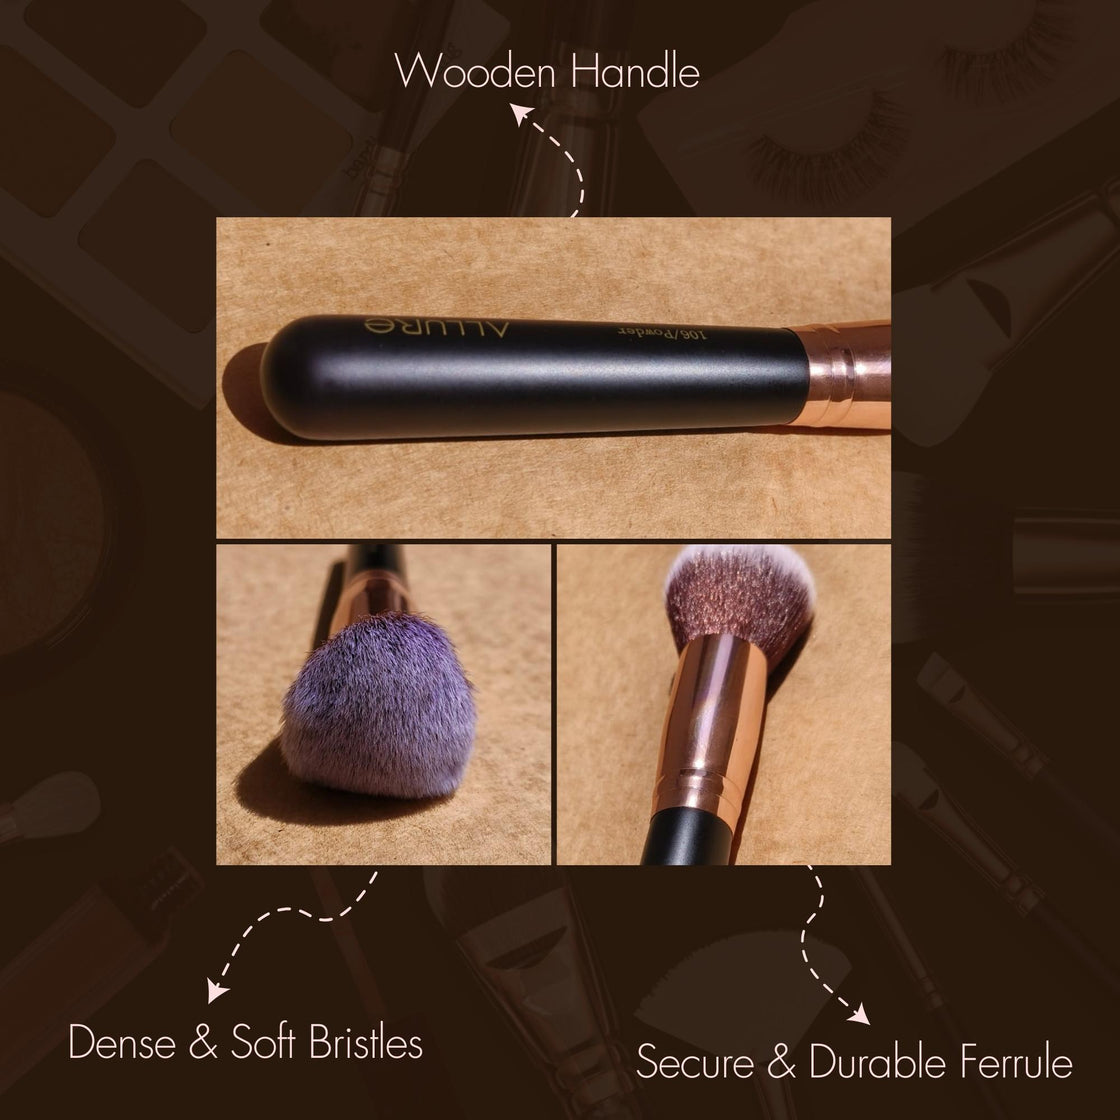 Allure Professional Makeup Flat Blender Brush- 227